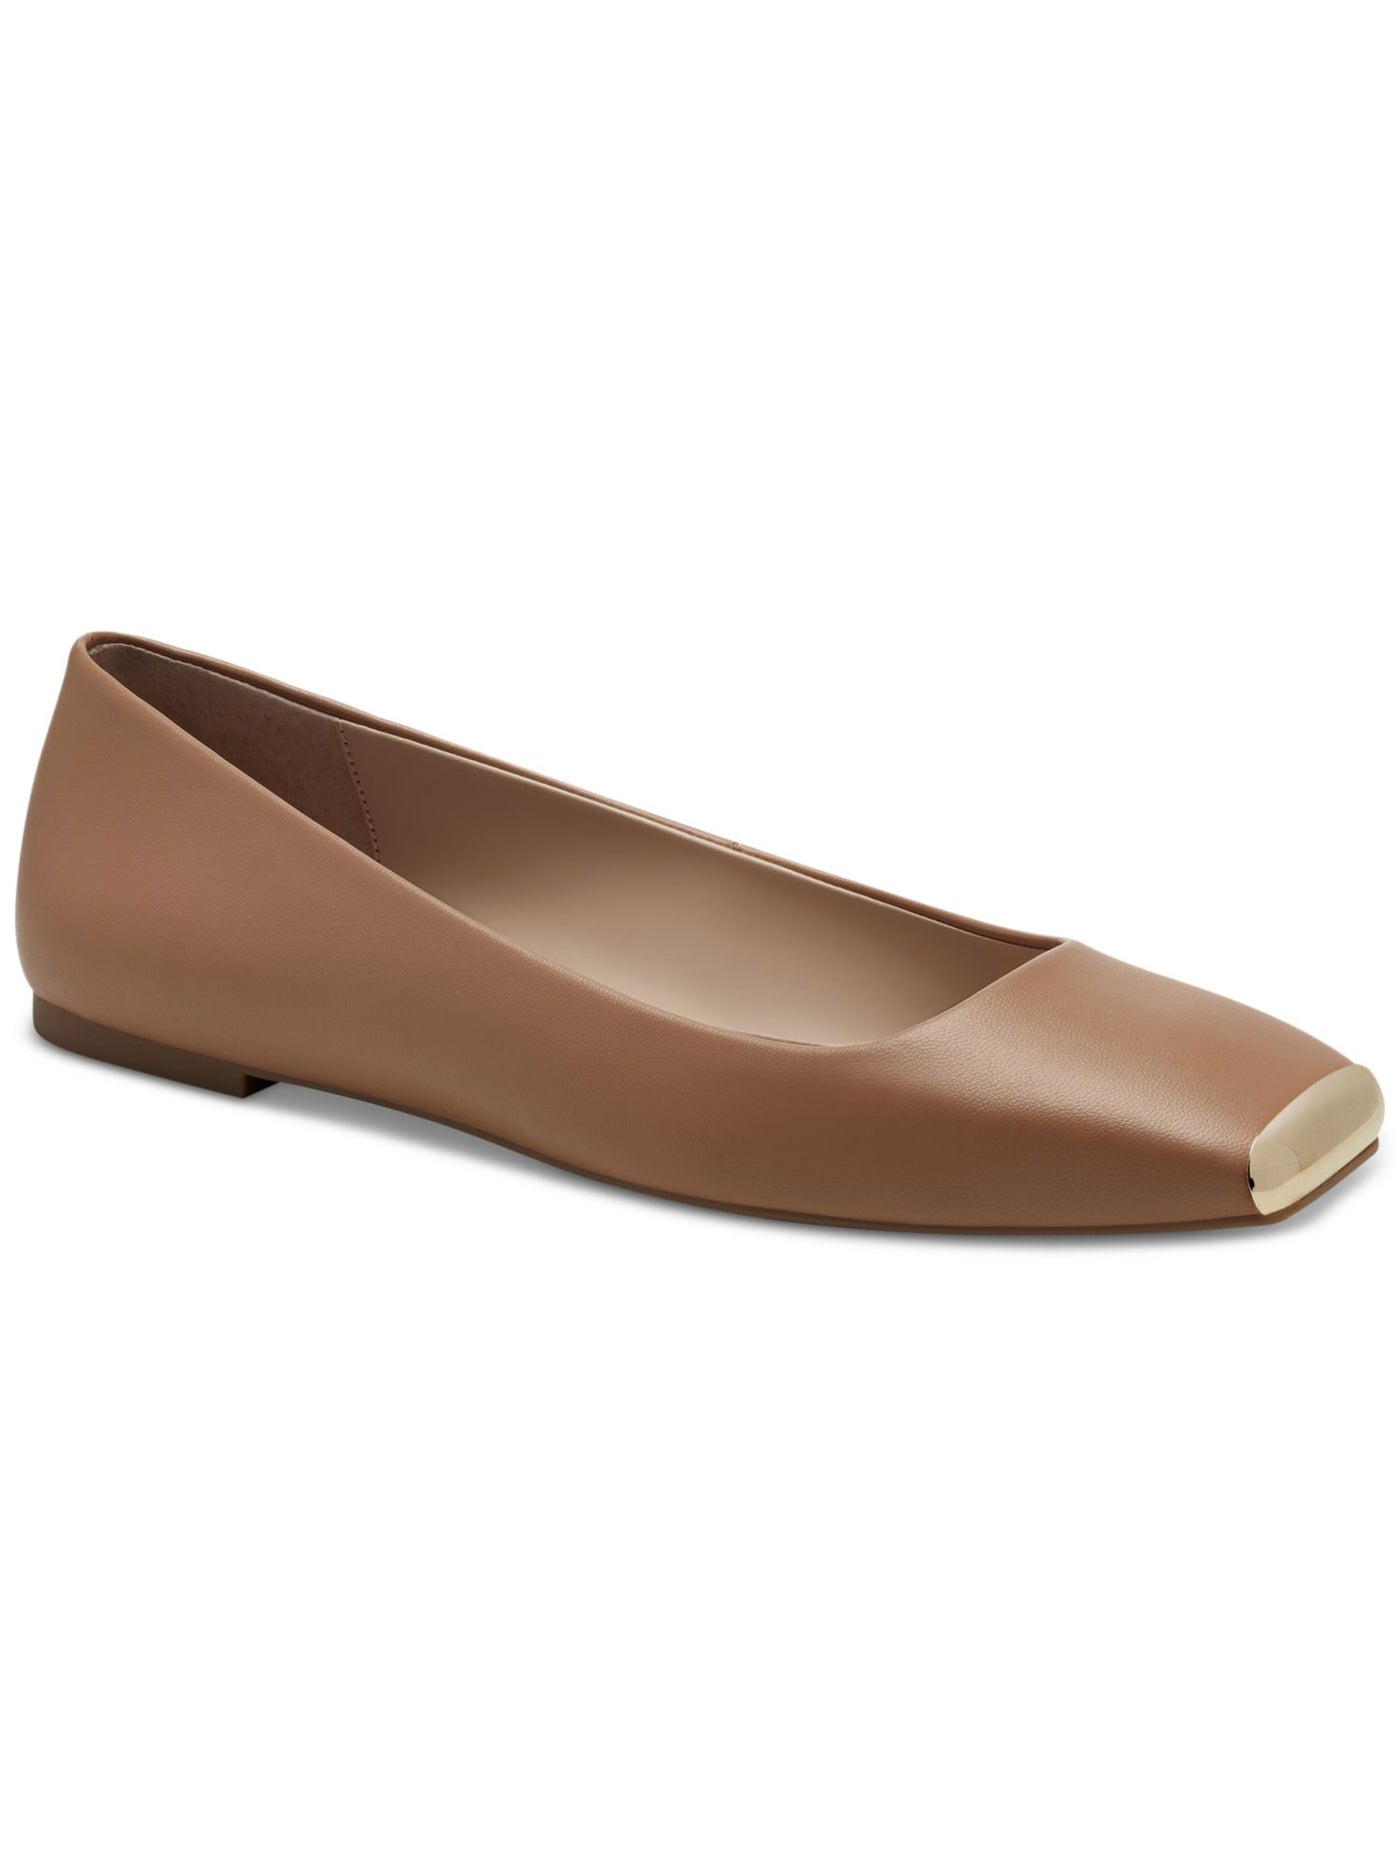 ALFANI Womens Brown Flexible Sole Padded Metallic Neptoon Square Toe Block Heel Slip On Flats Shoes 6.5 M